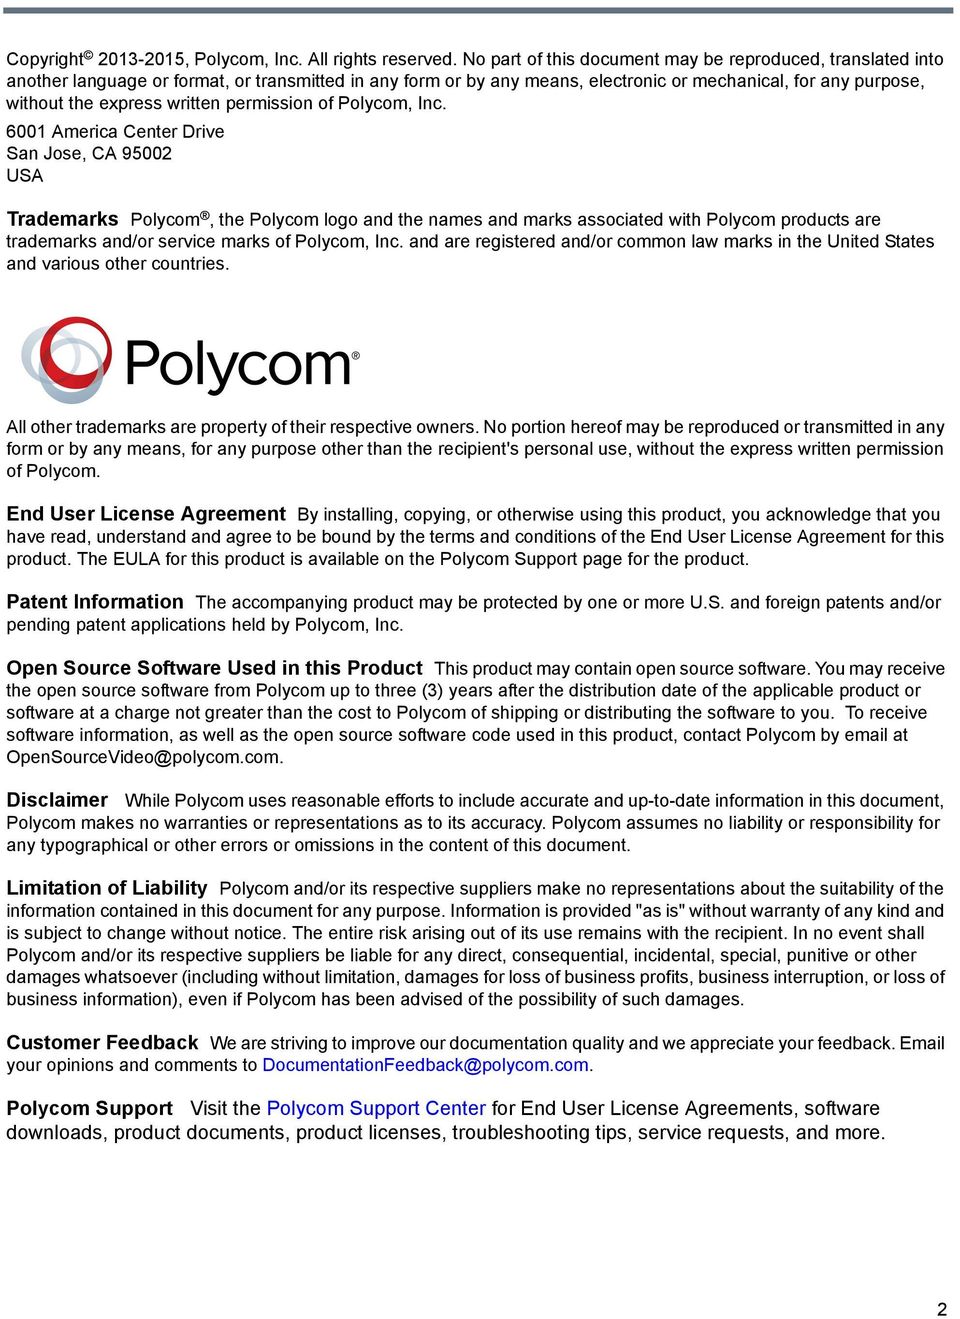 polycom support